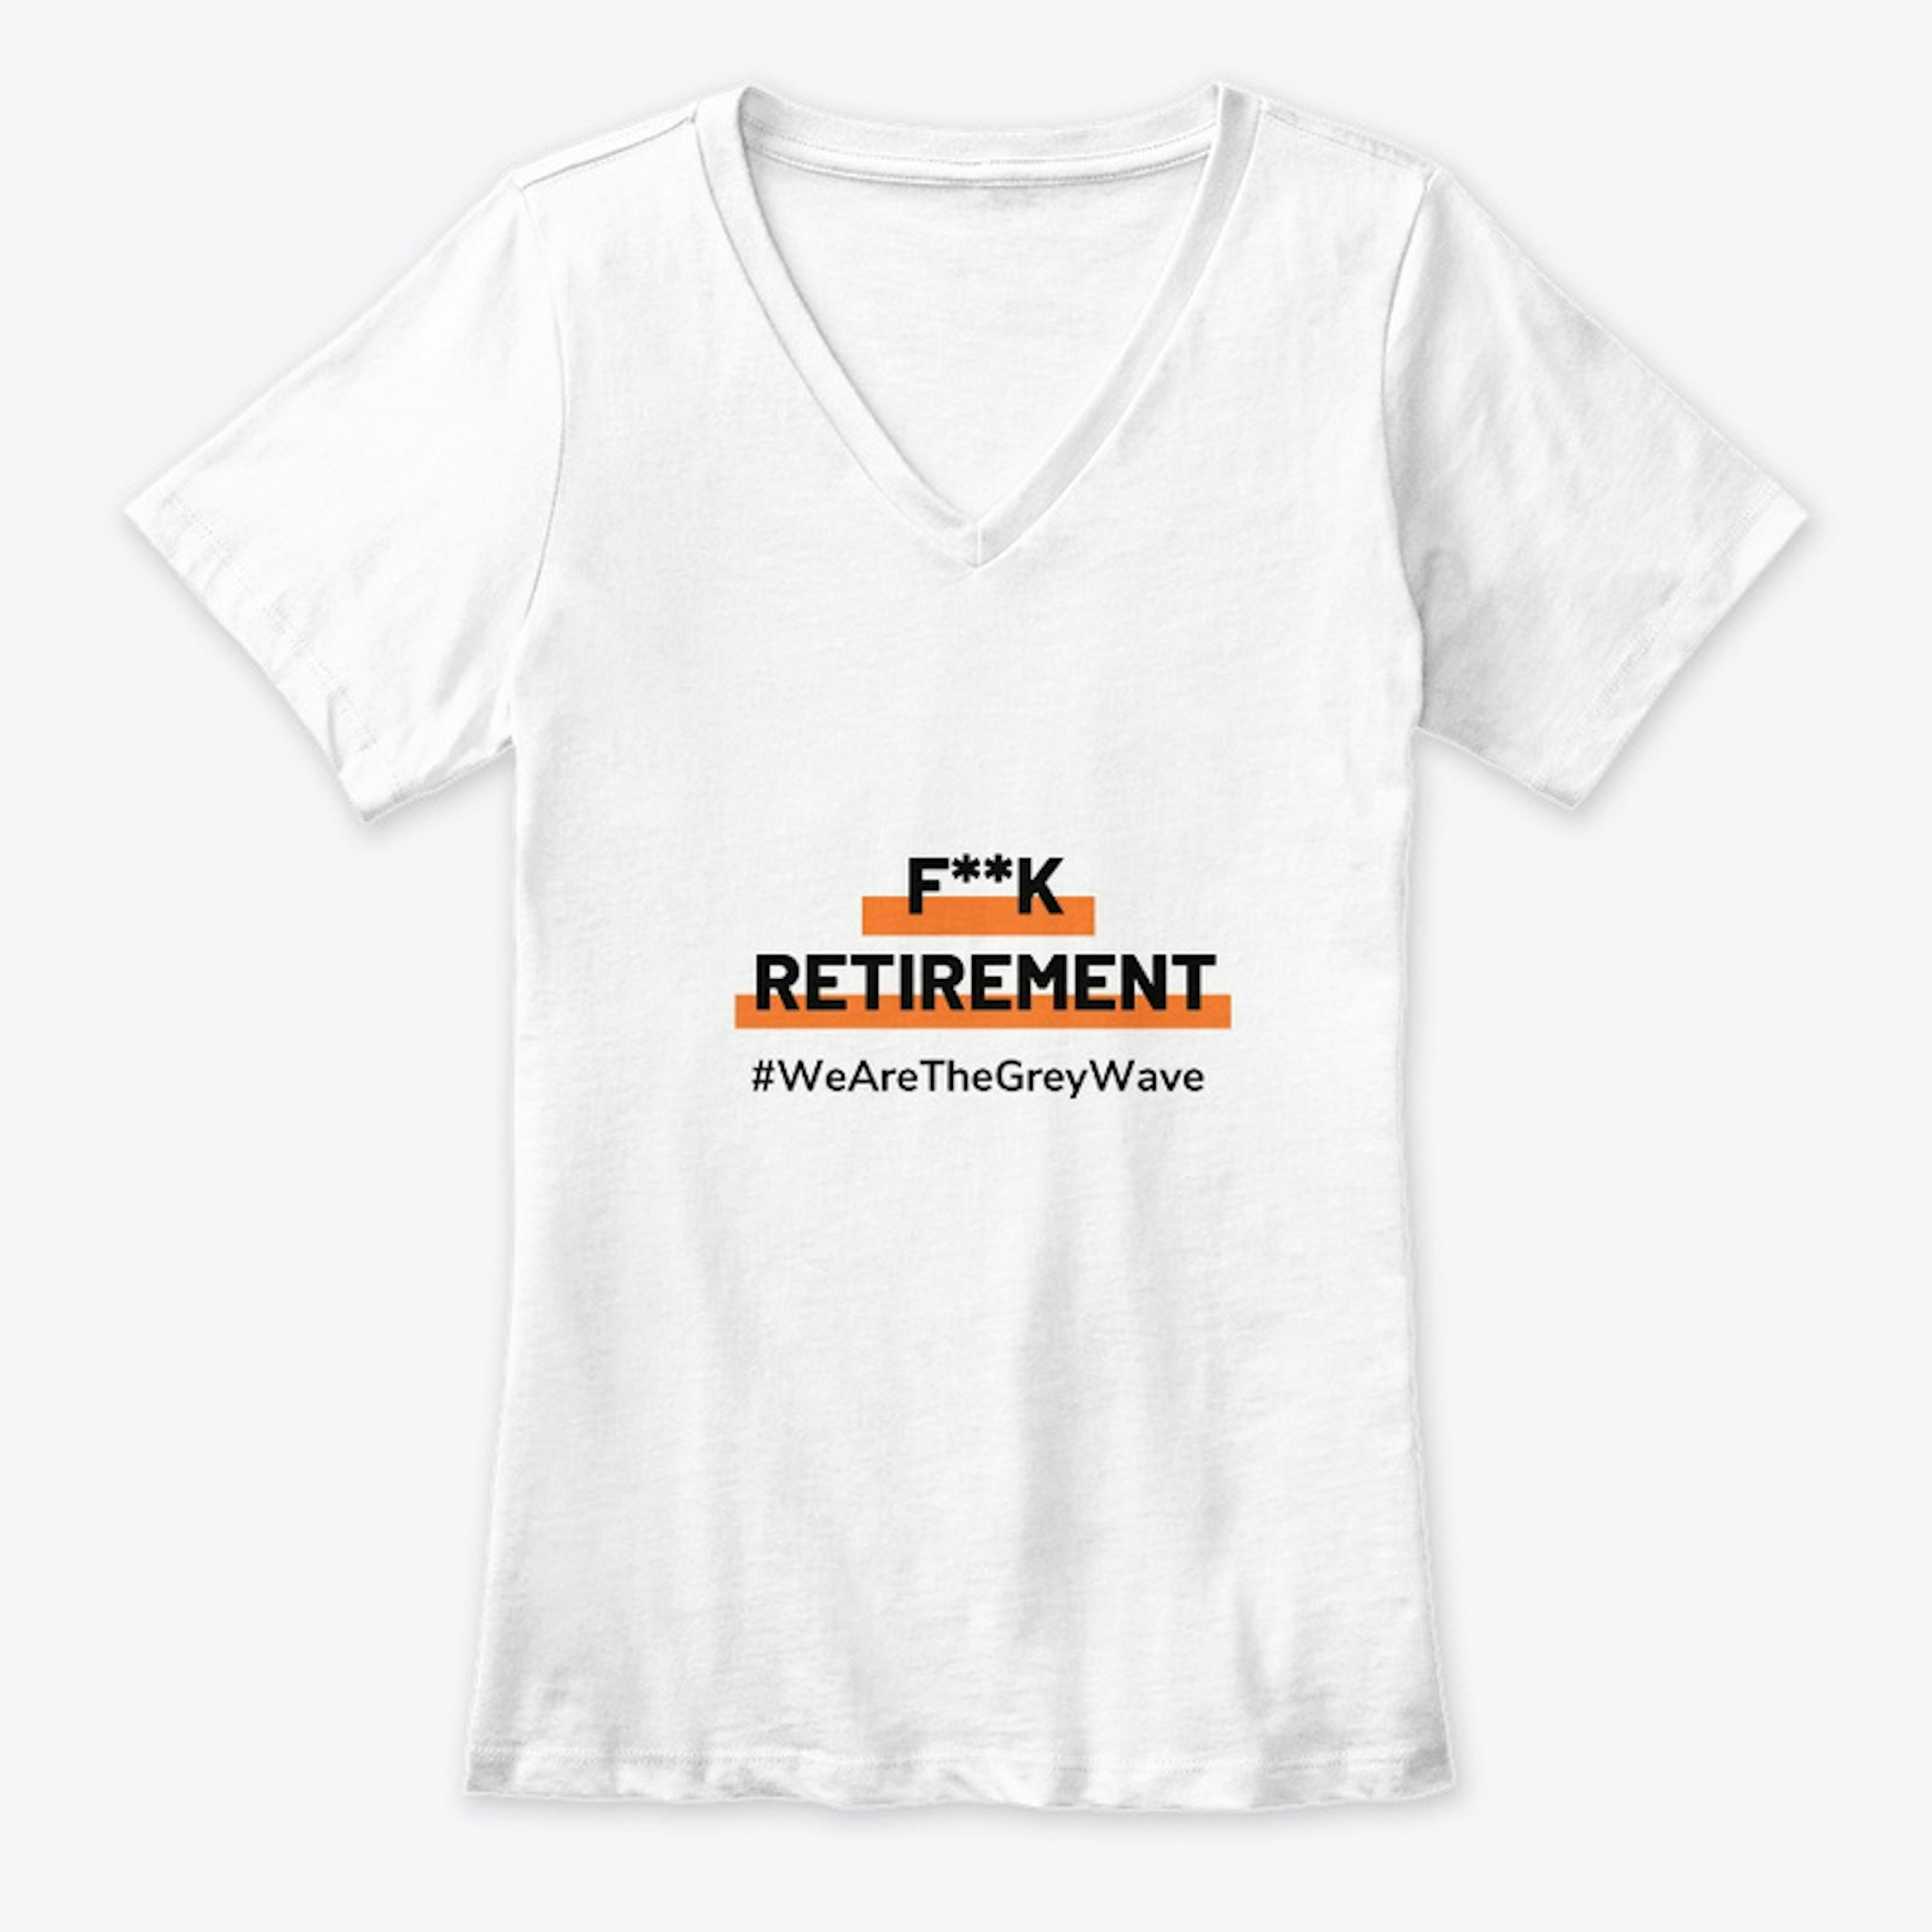 F**k Retirement (Ladies)